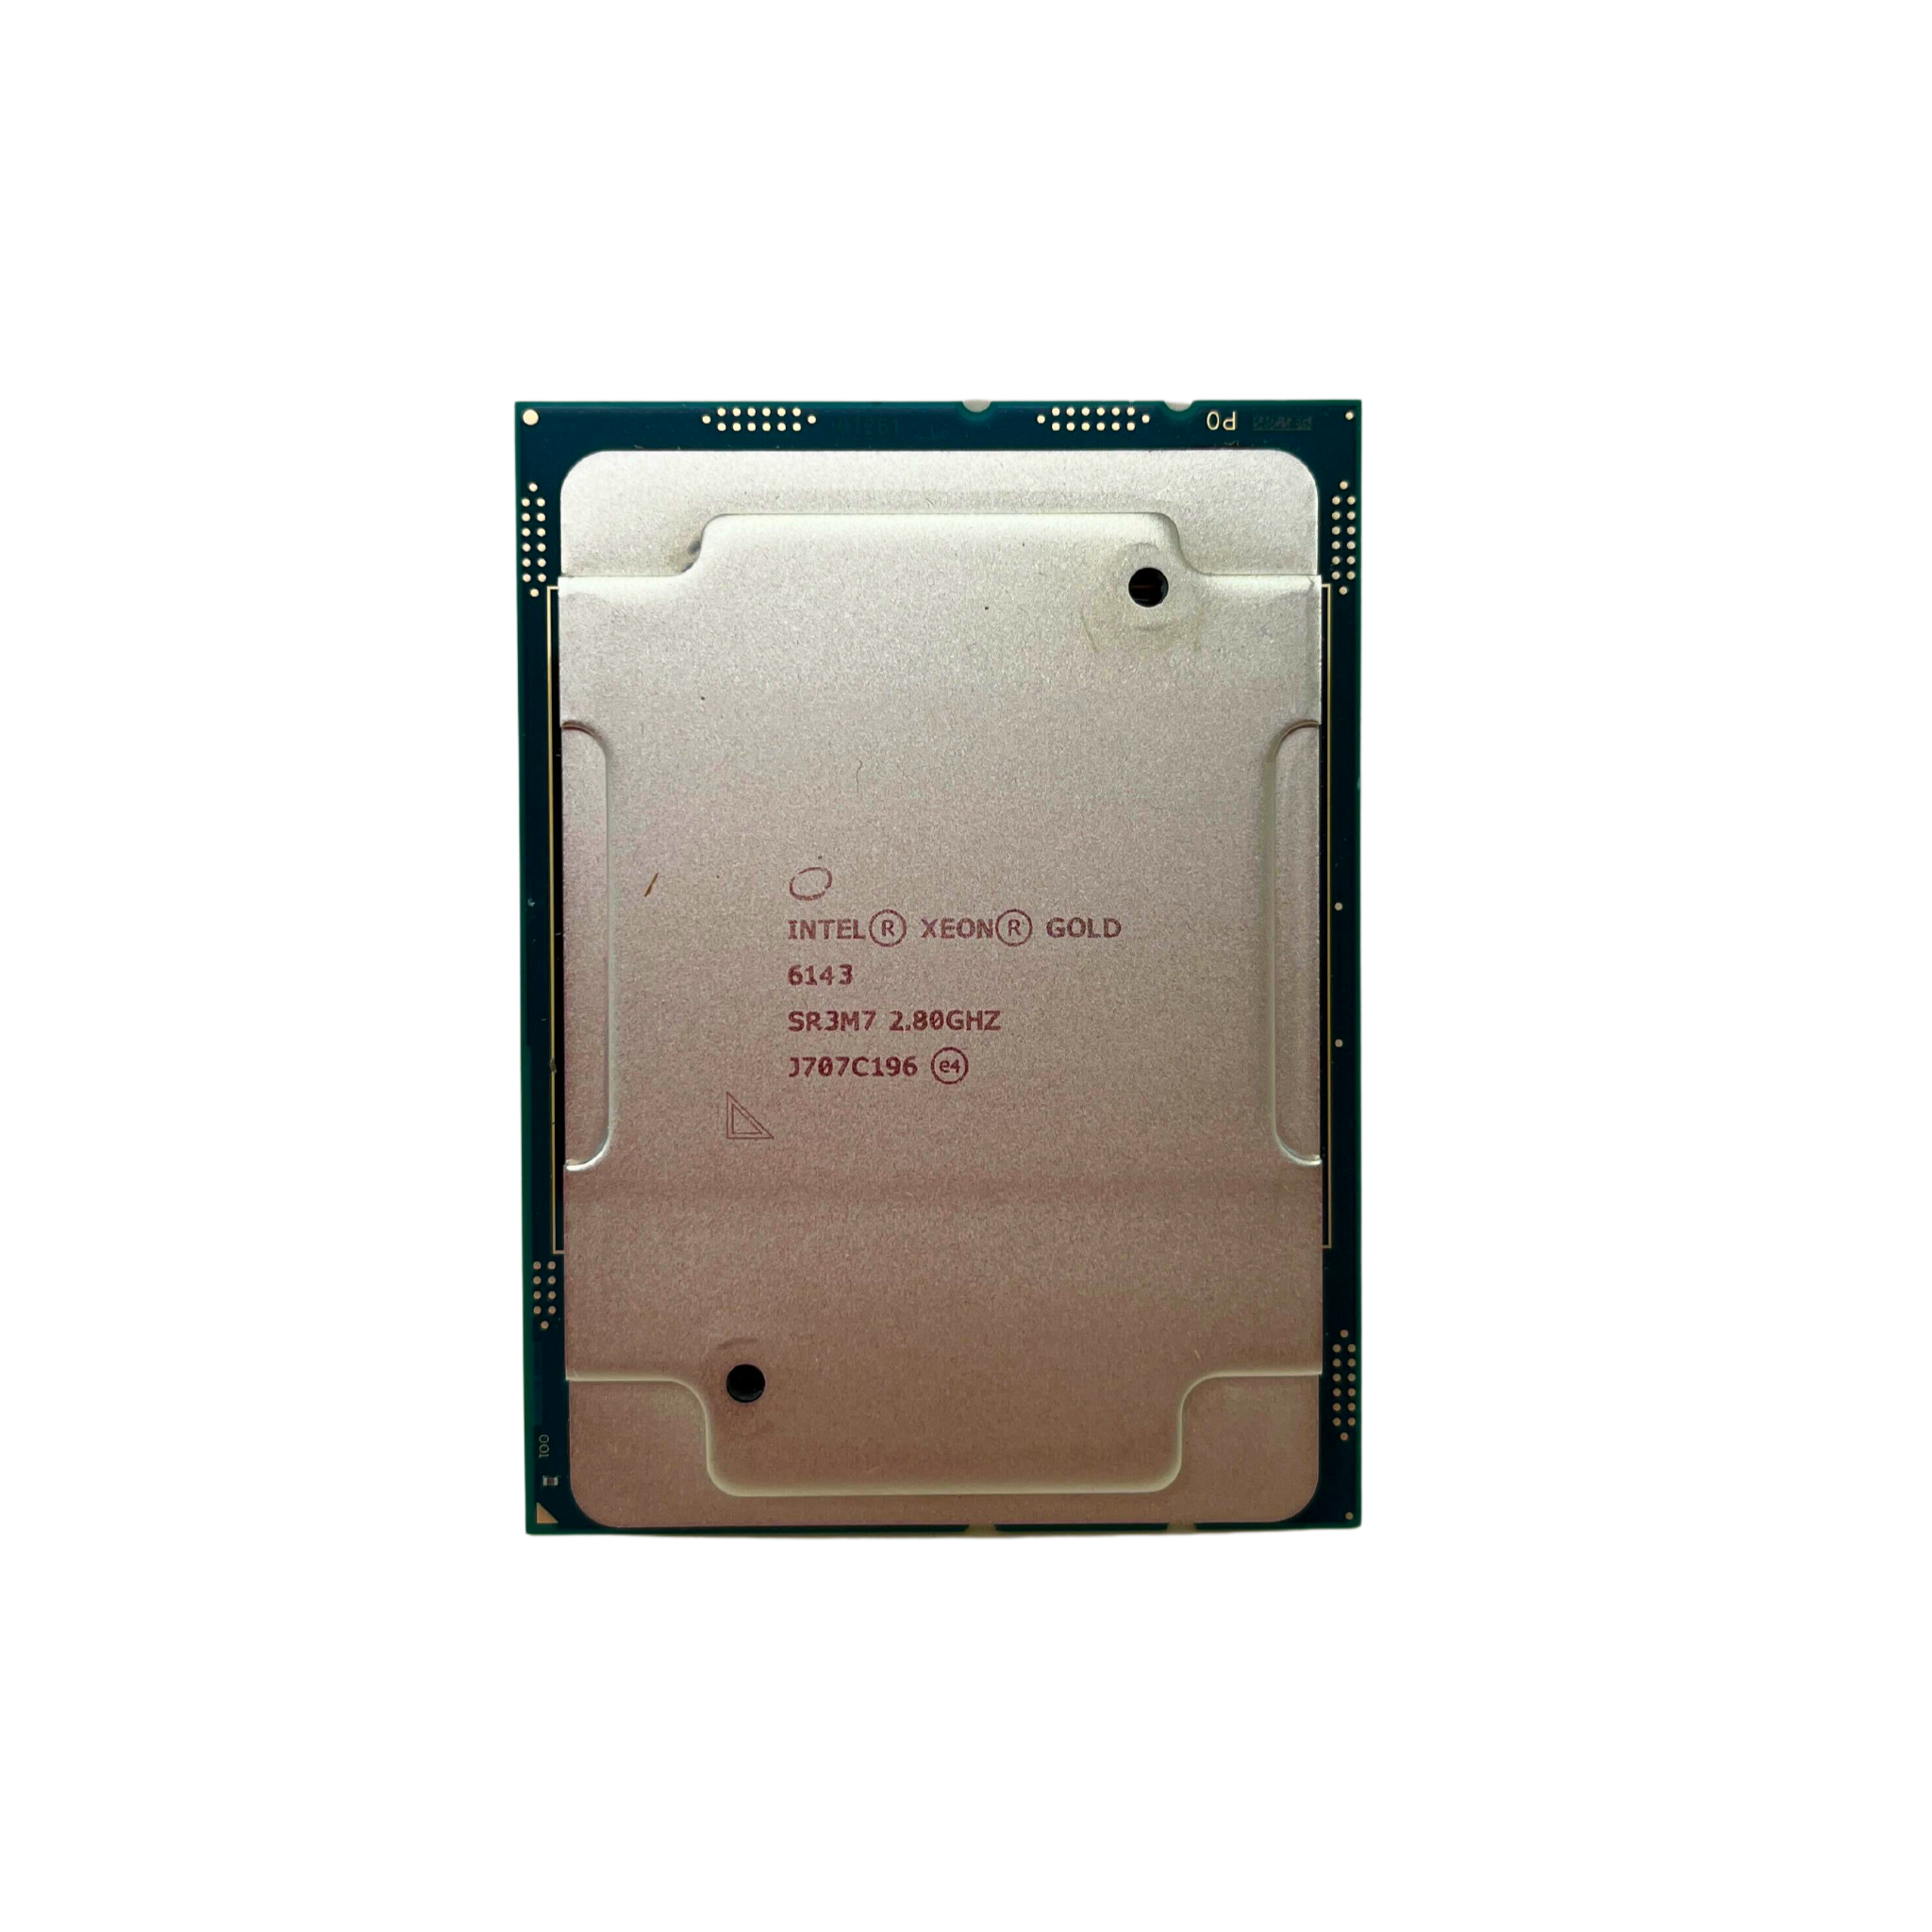 Intel Xeon Gold 6143 2.8ghz 22mb 16 Core CPU Processor (Xeon Gold 6143)